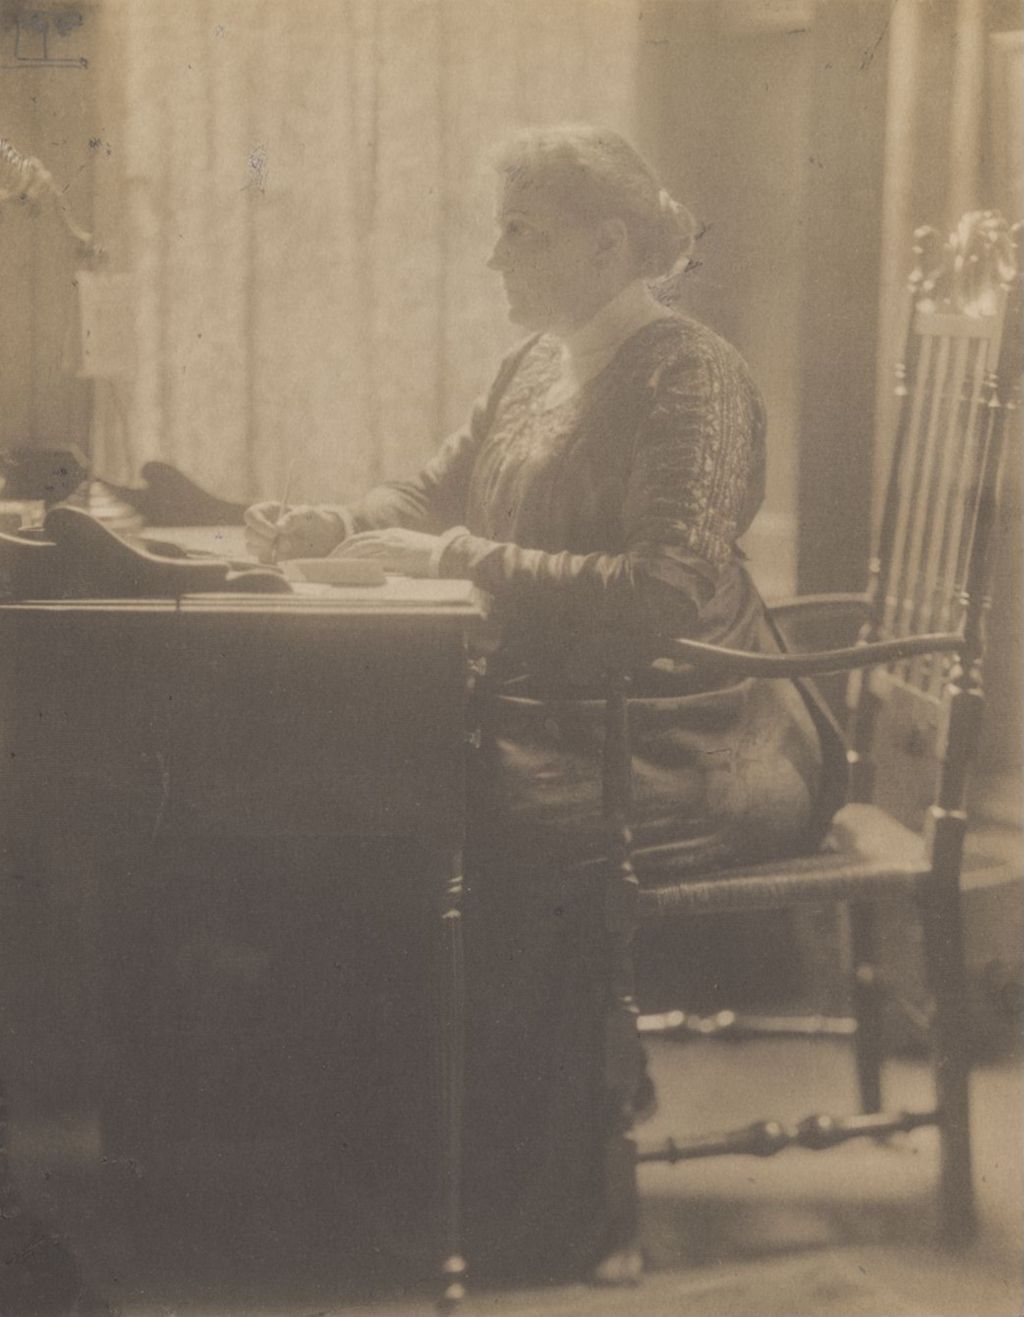 Jane Addams writing at a desk